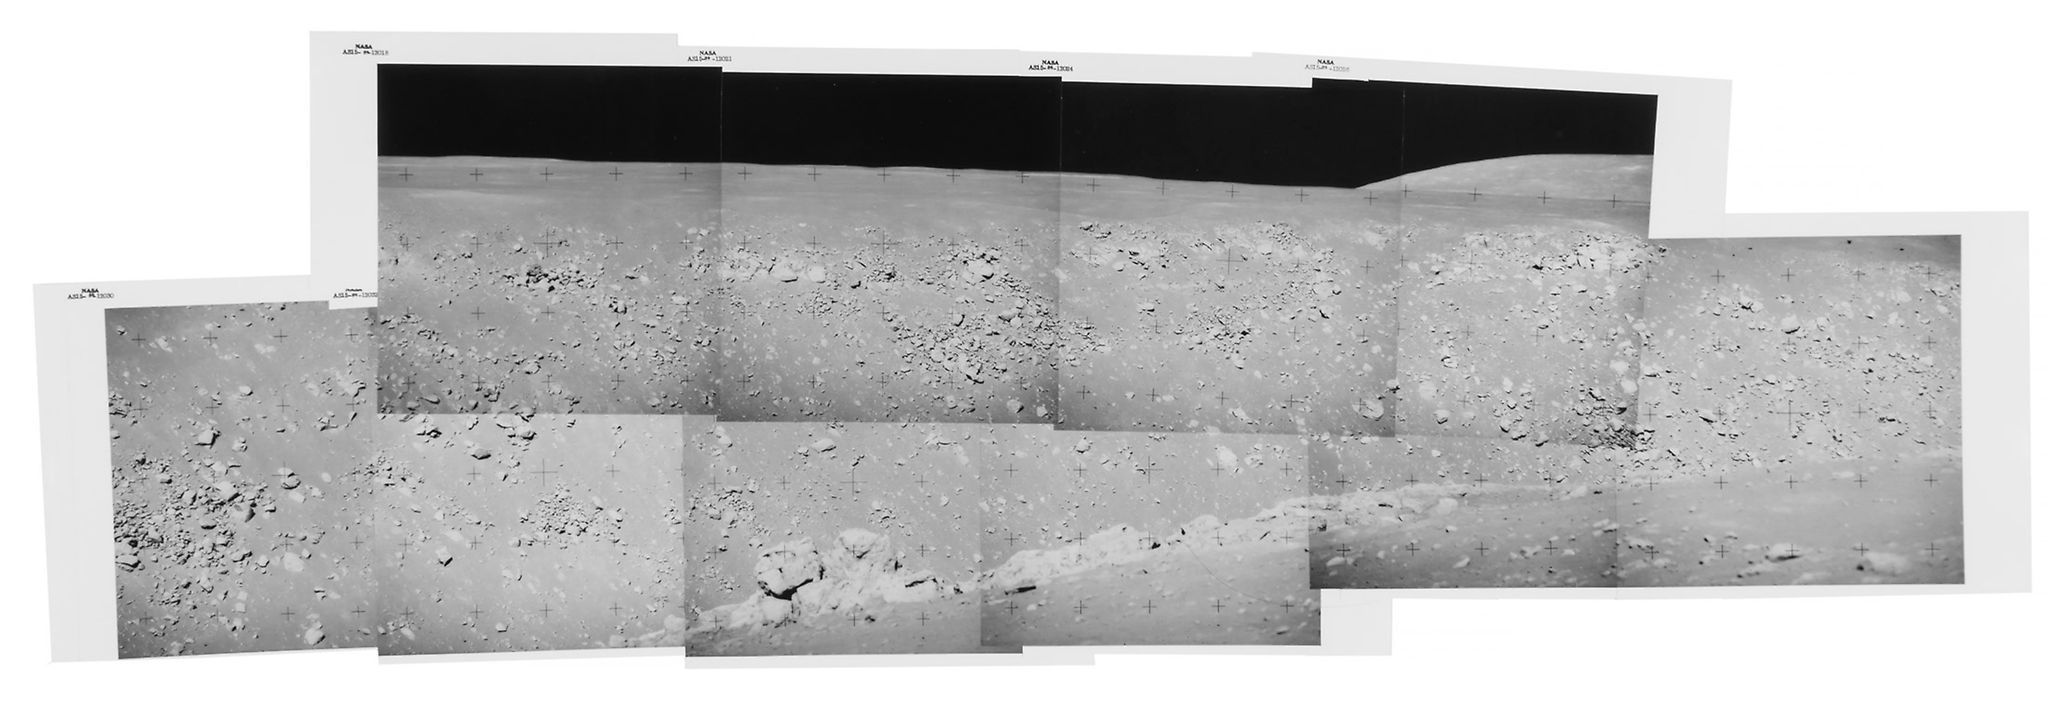 David Scott - Telephoto panorama of Hadley Rille canyon’s Far Wall, Station 9A, EVA 3, Apollo 15,